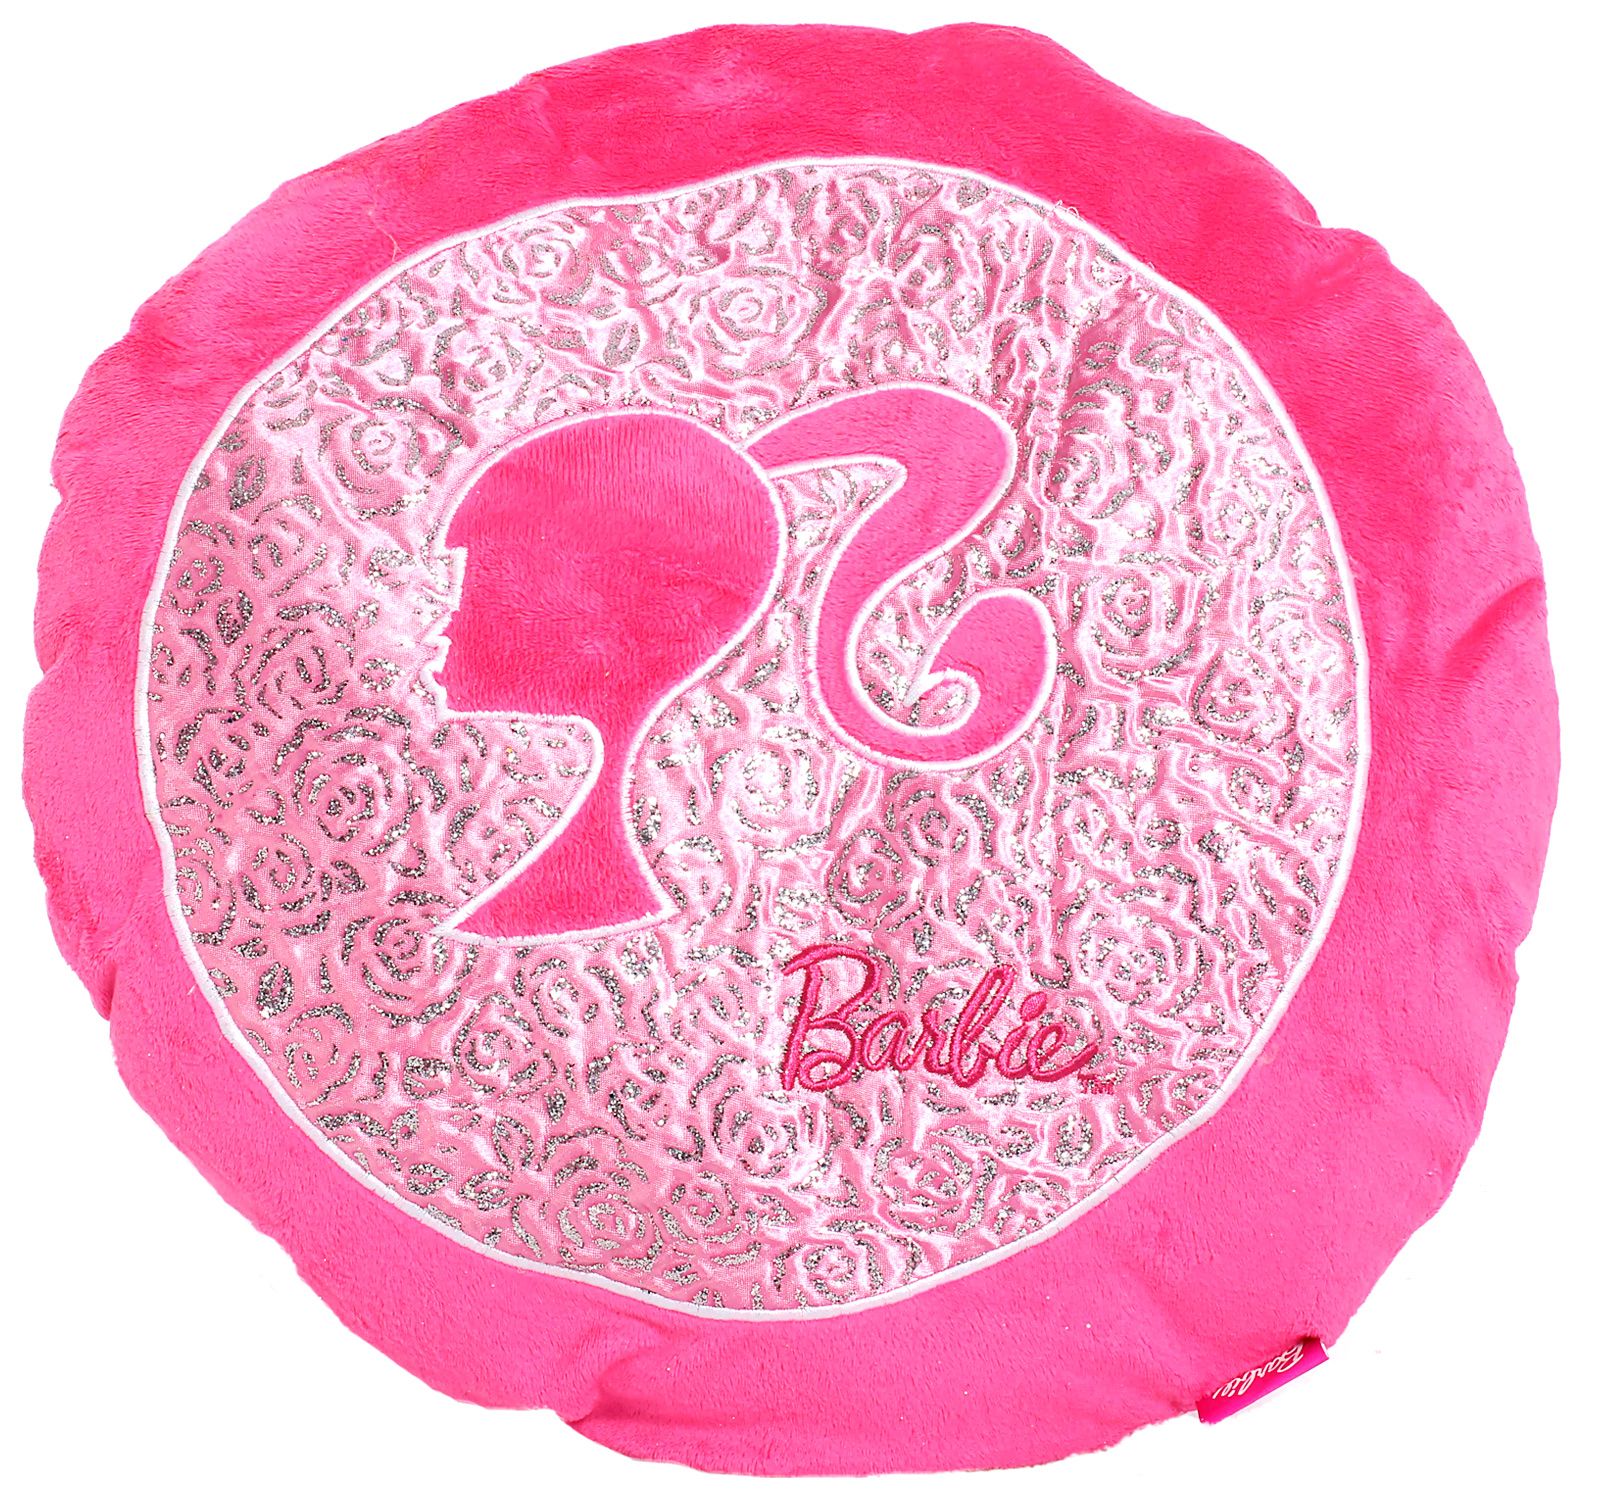 Barbie - Round Glitter Cushion